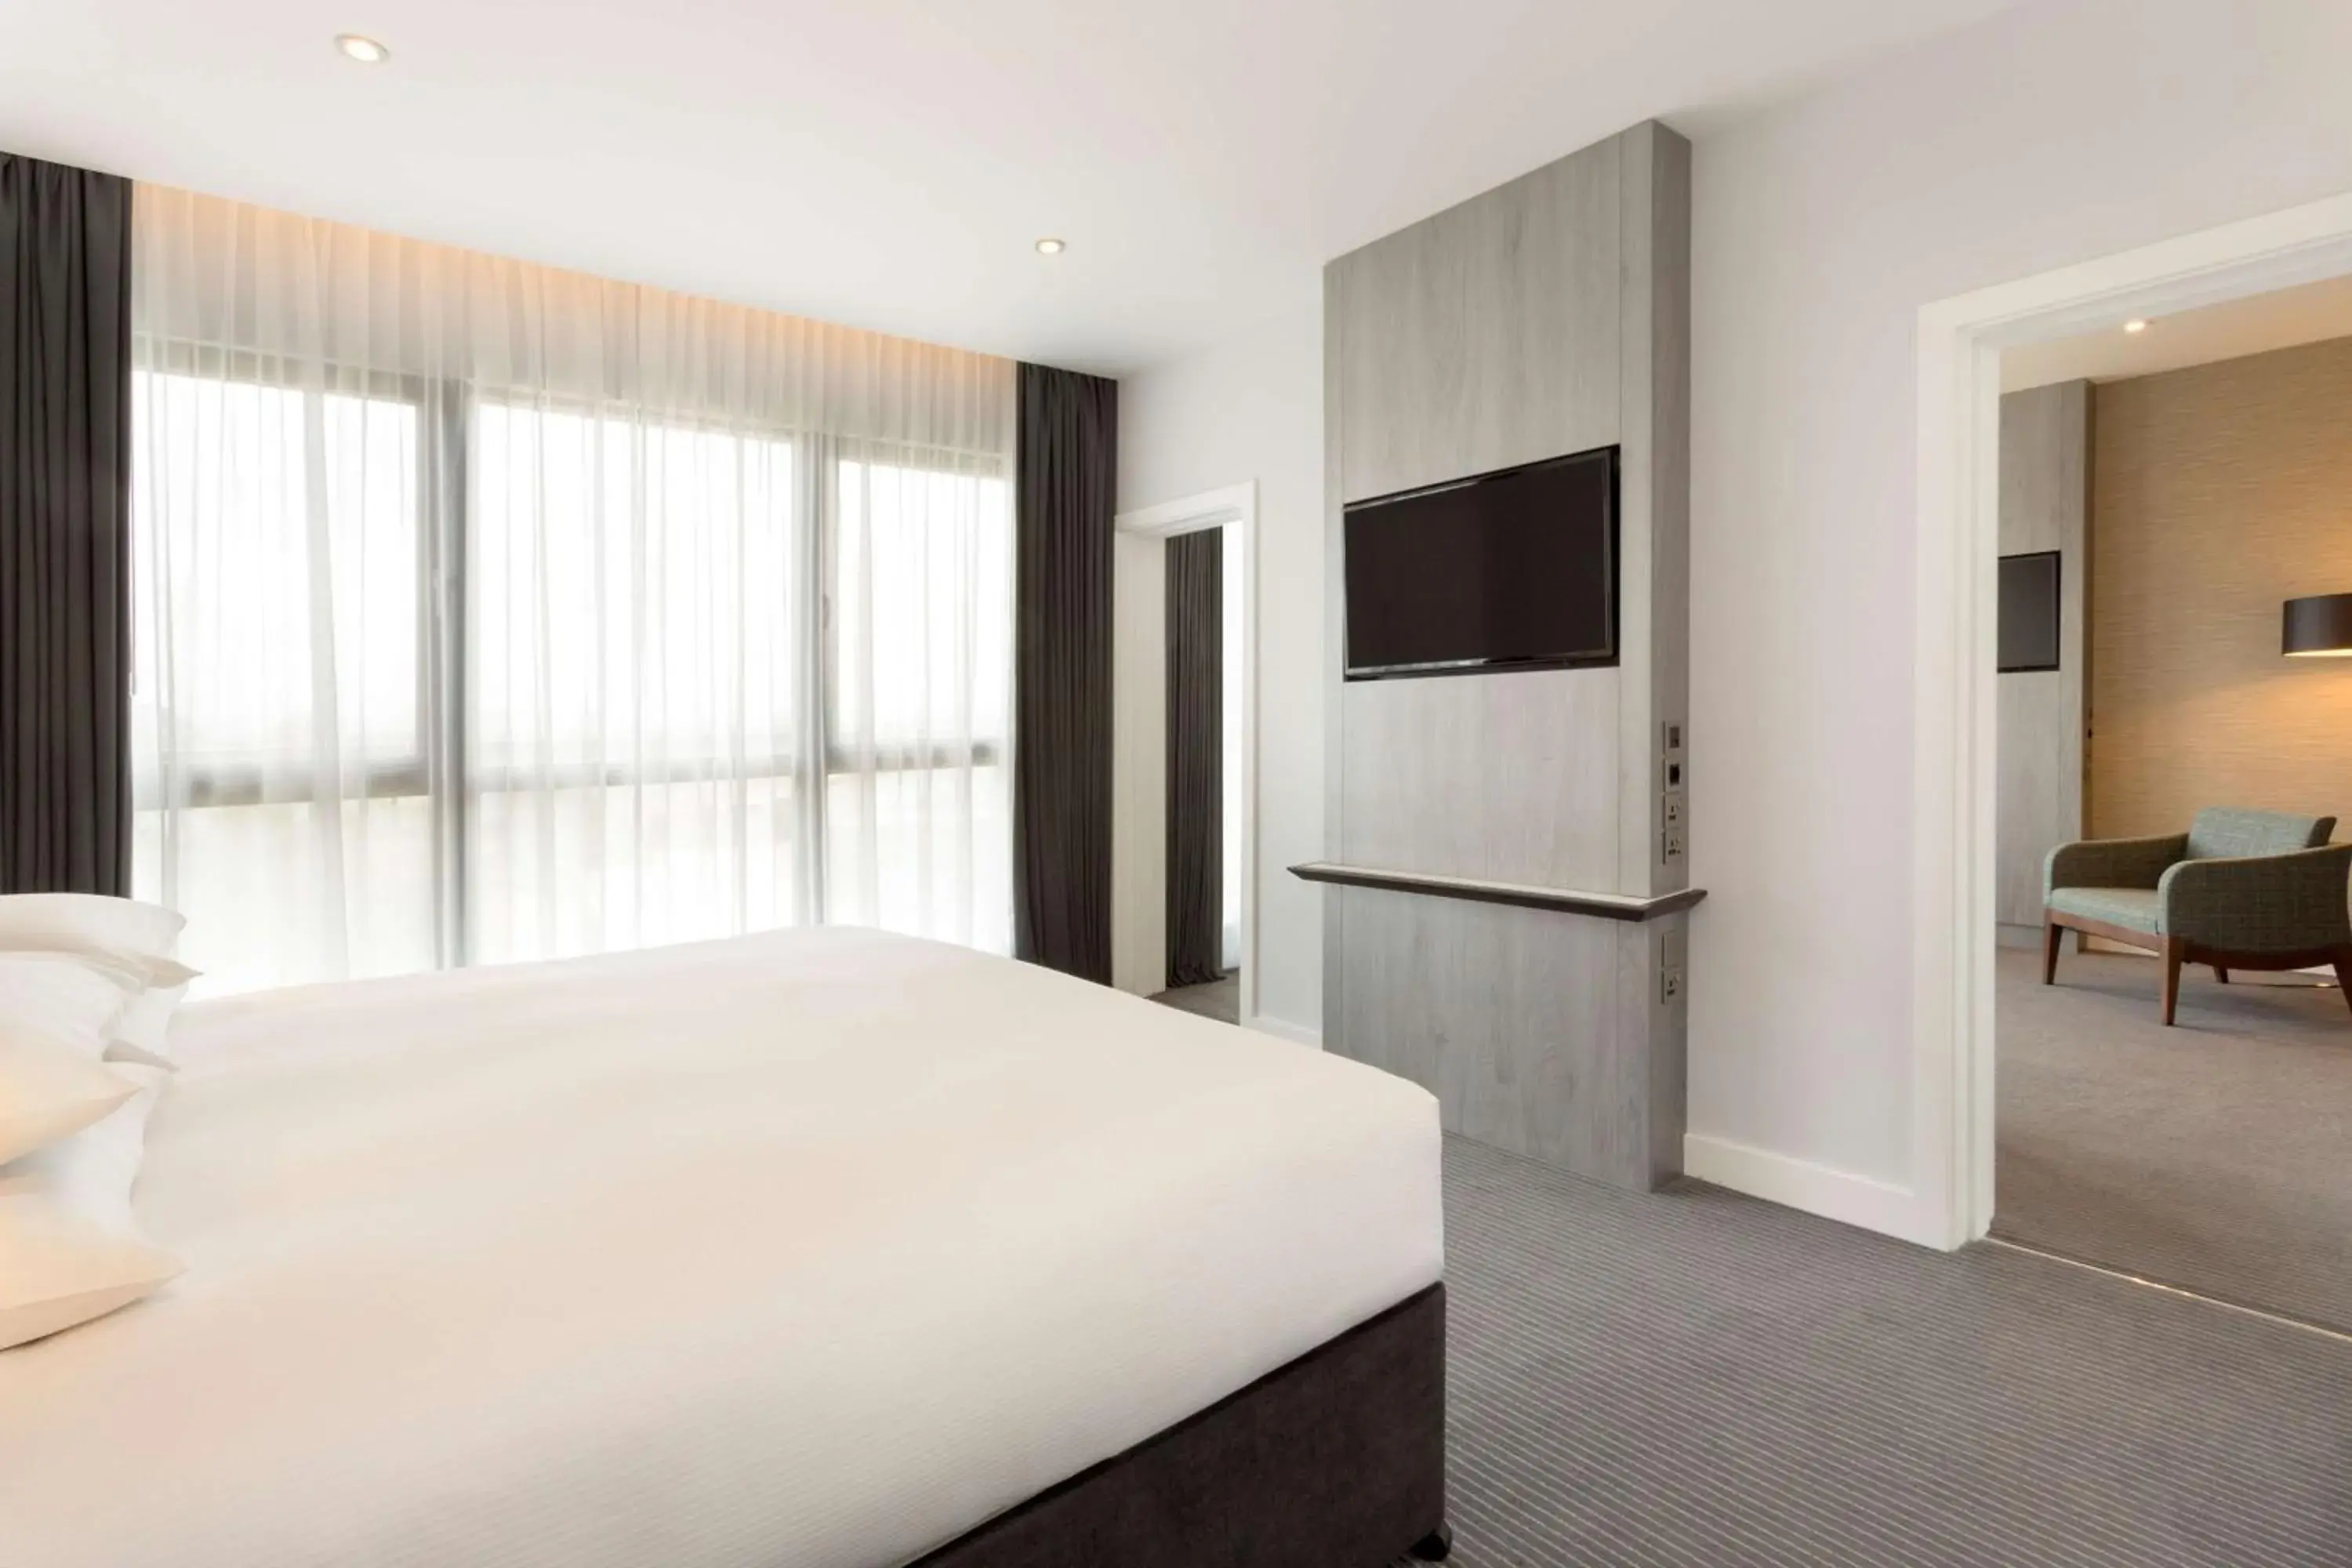 Bedroom, Bed in DoubleTree by Hilton Edinburgh - Queensferry Crossing